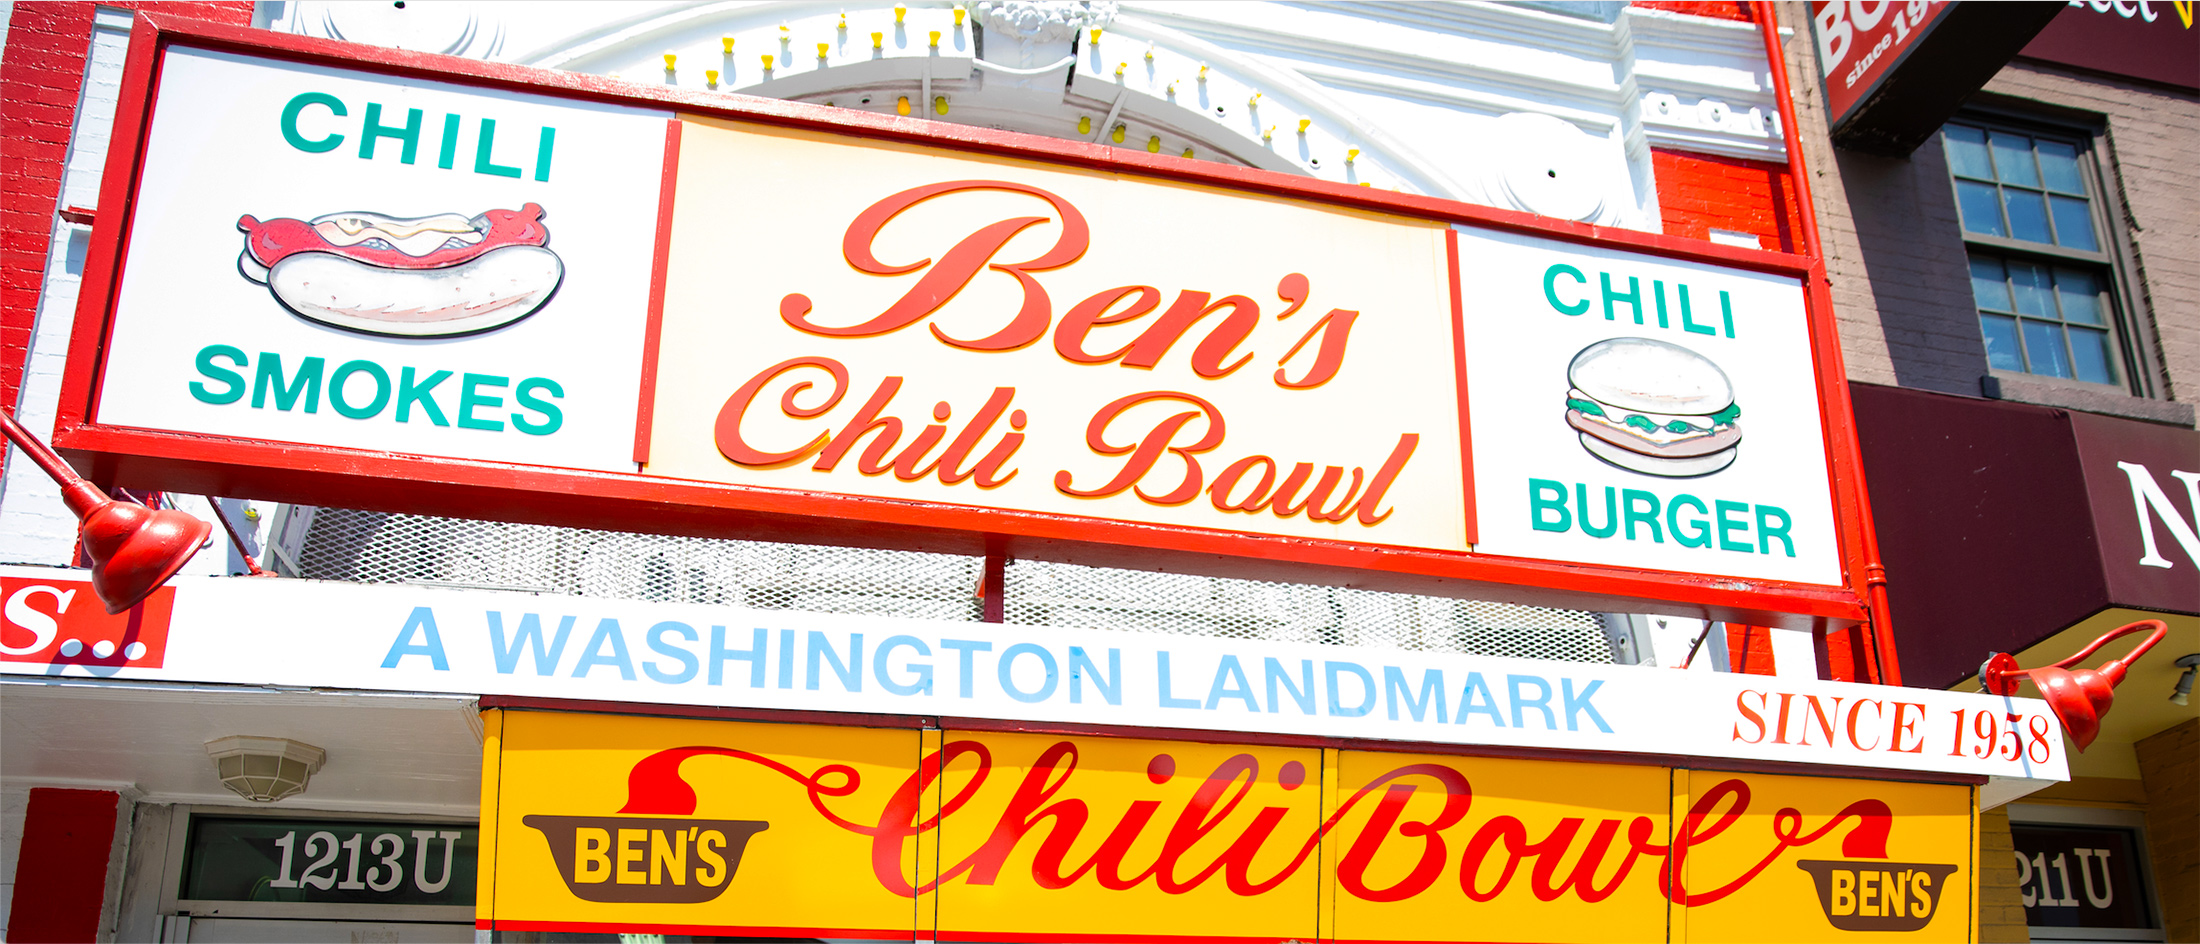 Ben's Chili Bowl - Original location on U Street